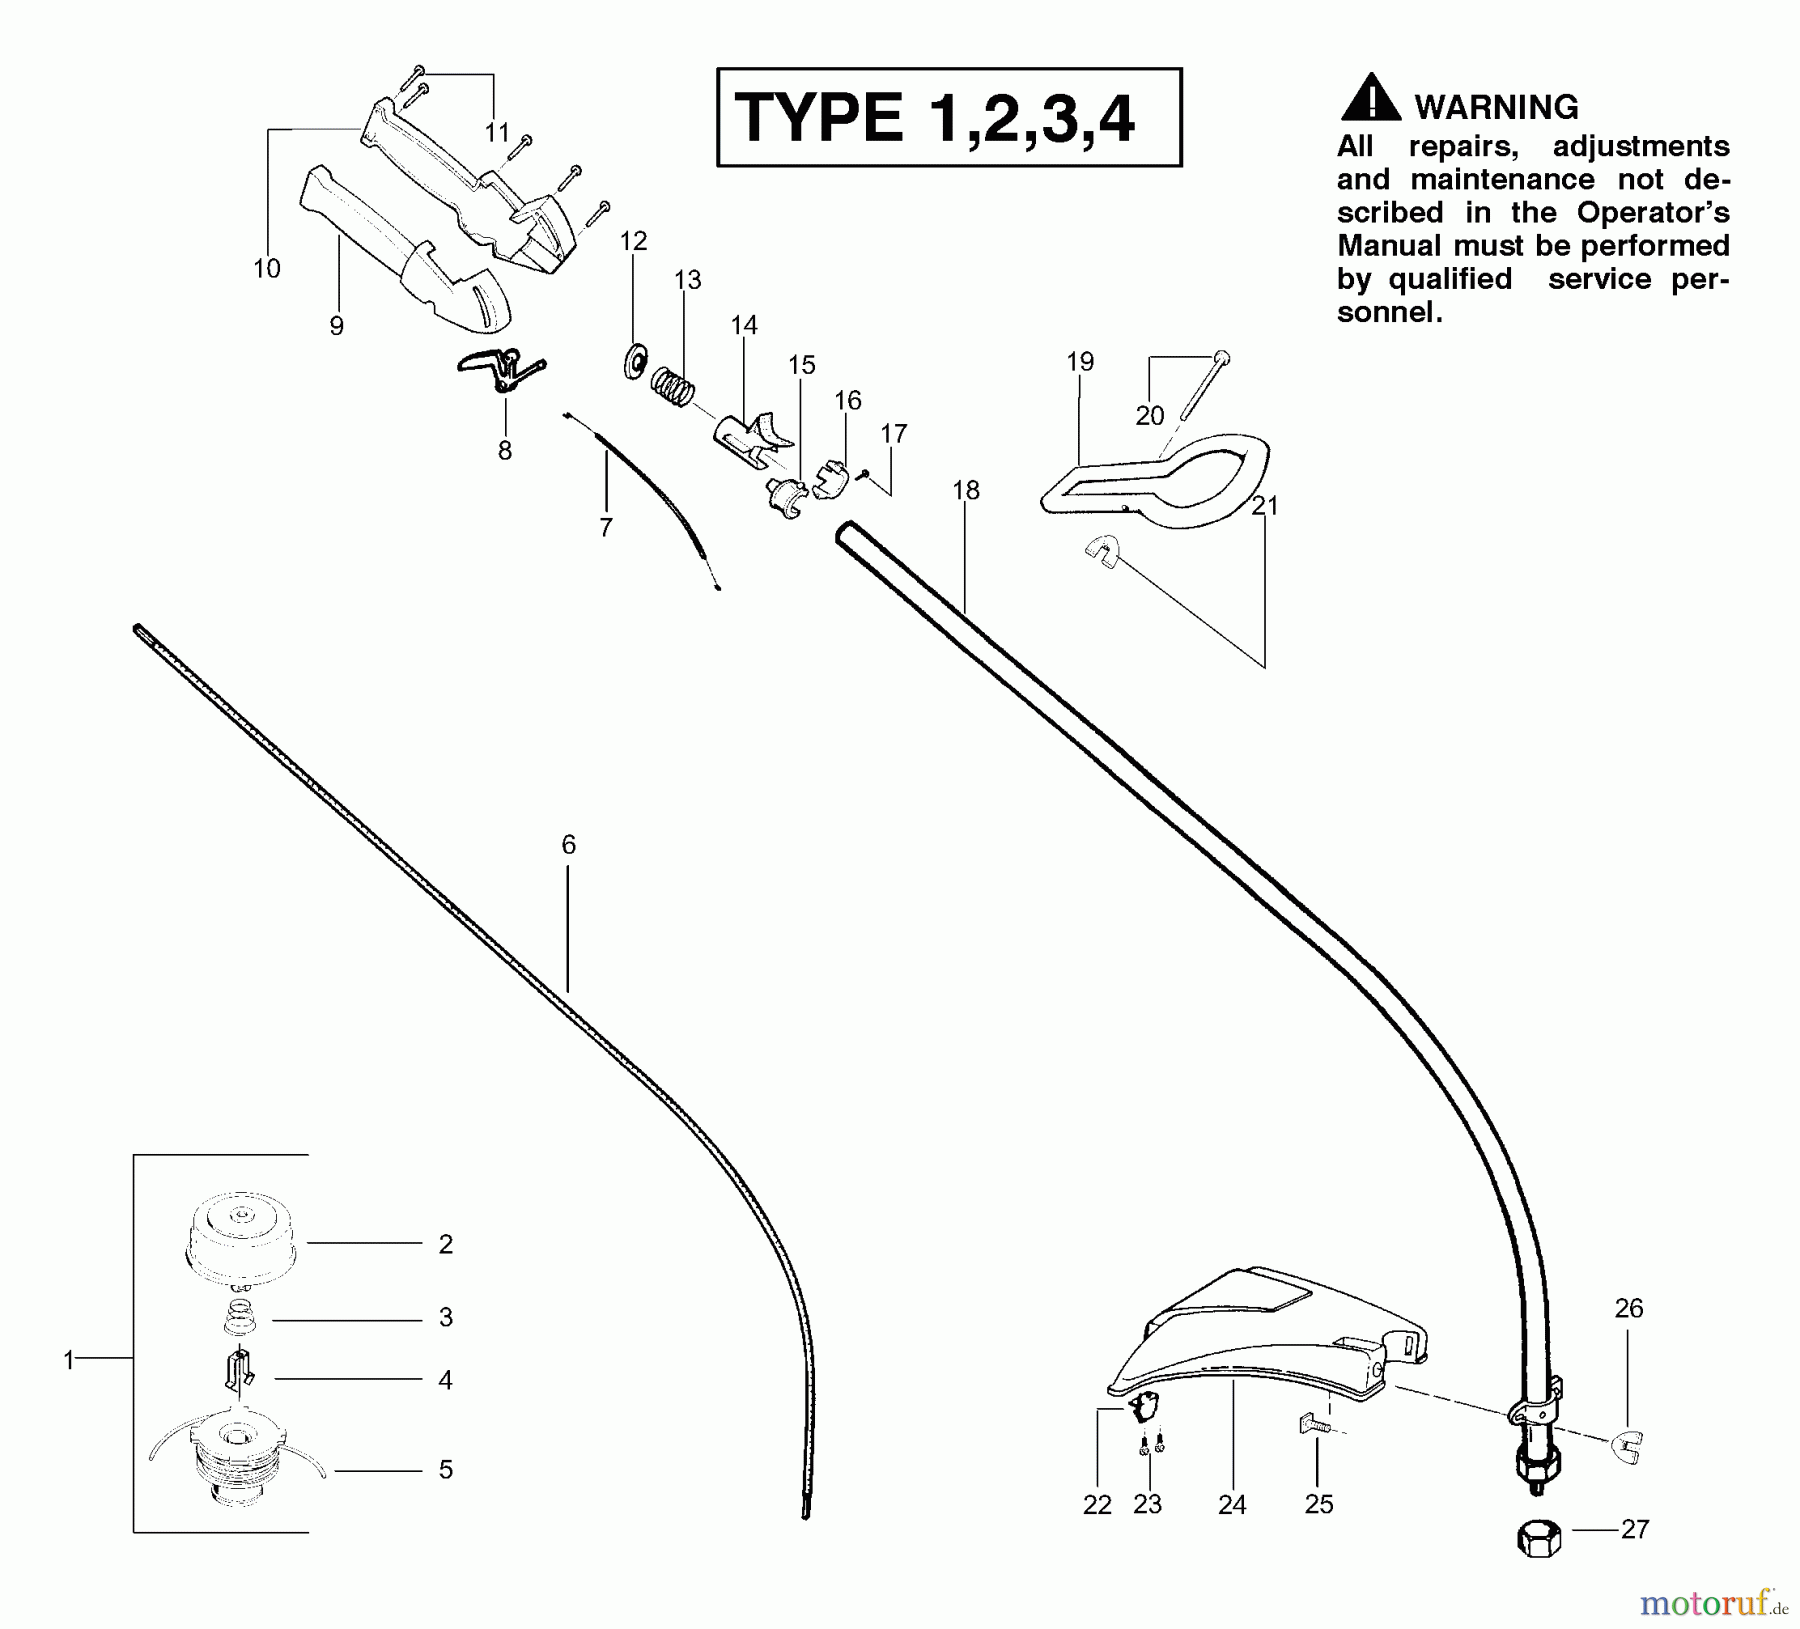  Poulan / Weed Eater Motorsensen, Trimmer XT400 (Type 4) - Weed Eater String Trimmer Handle & Shaft Assembly